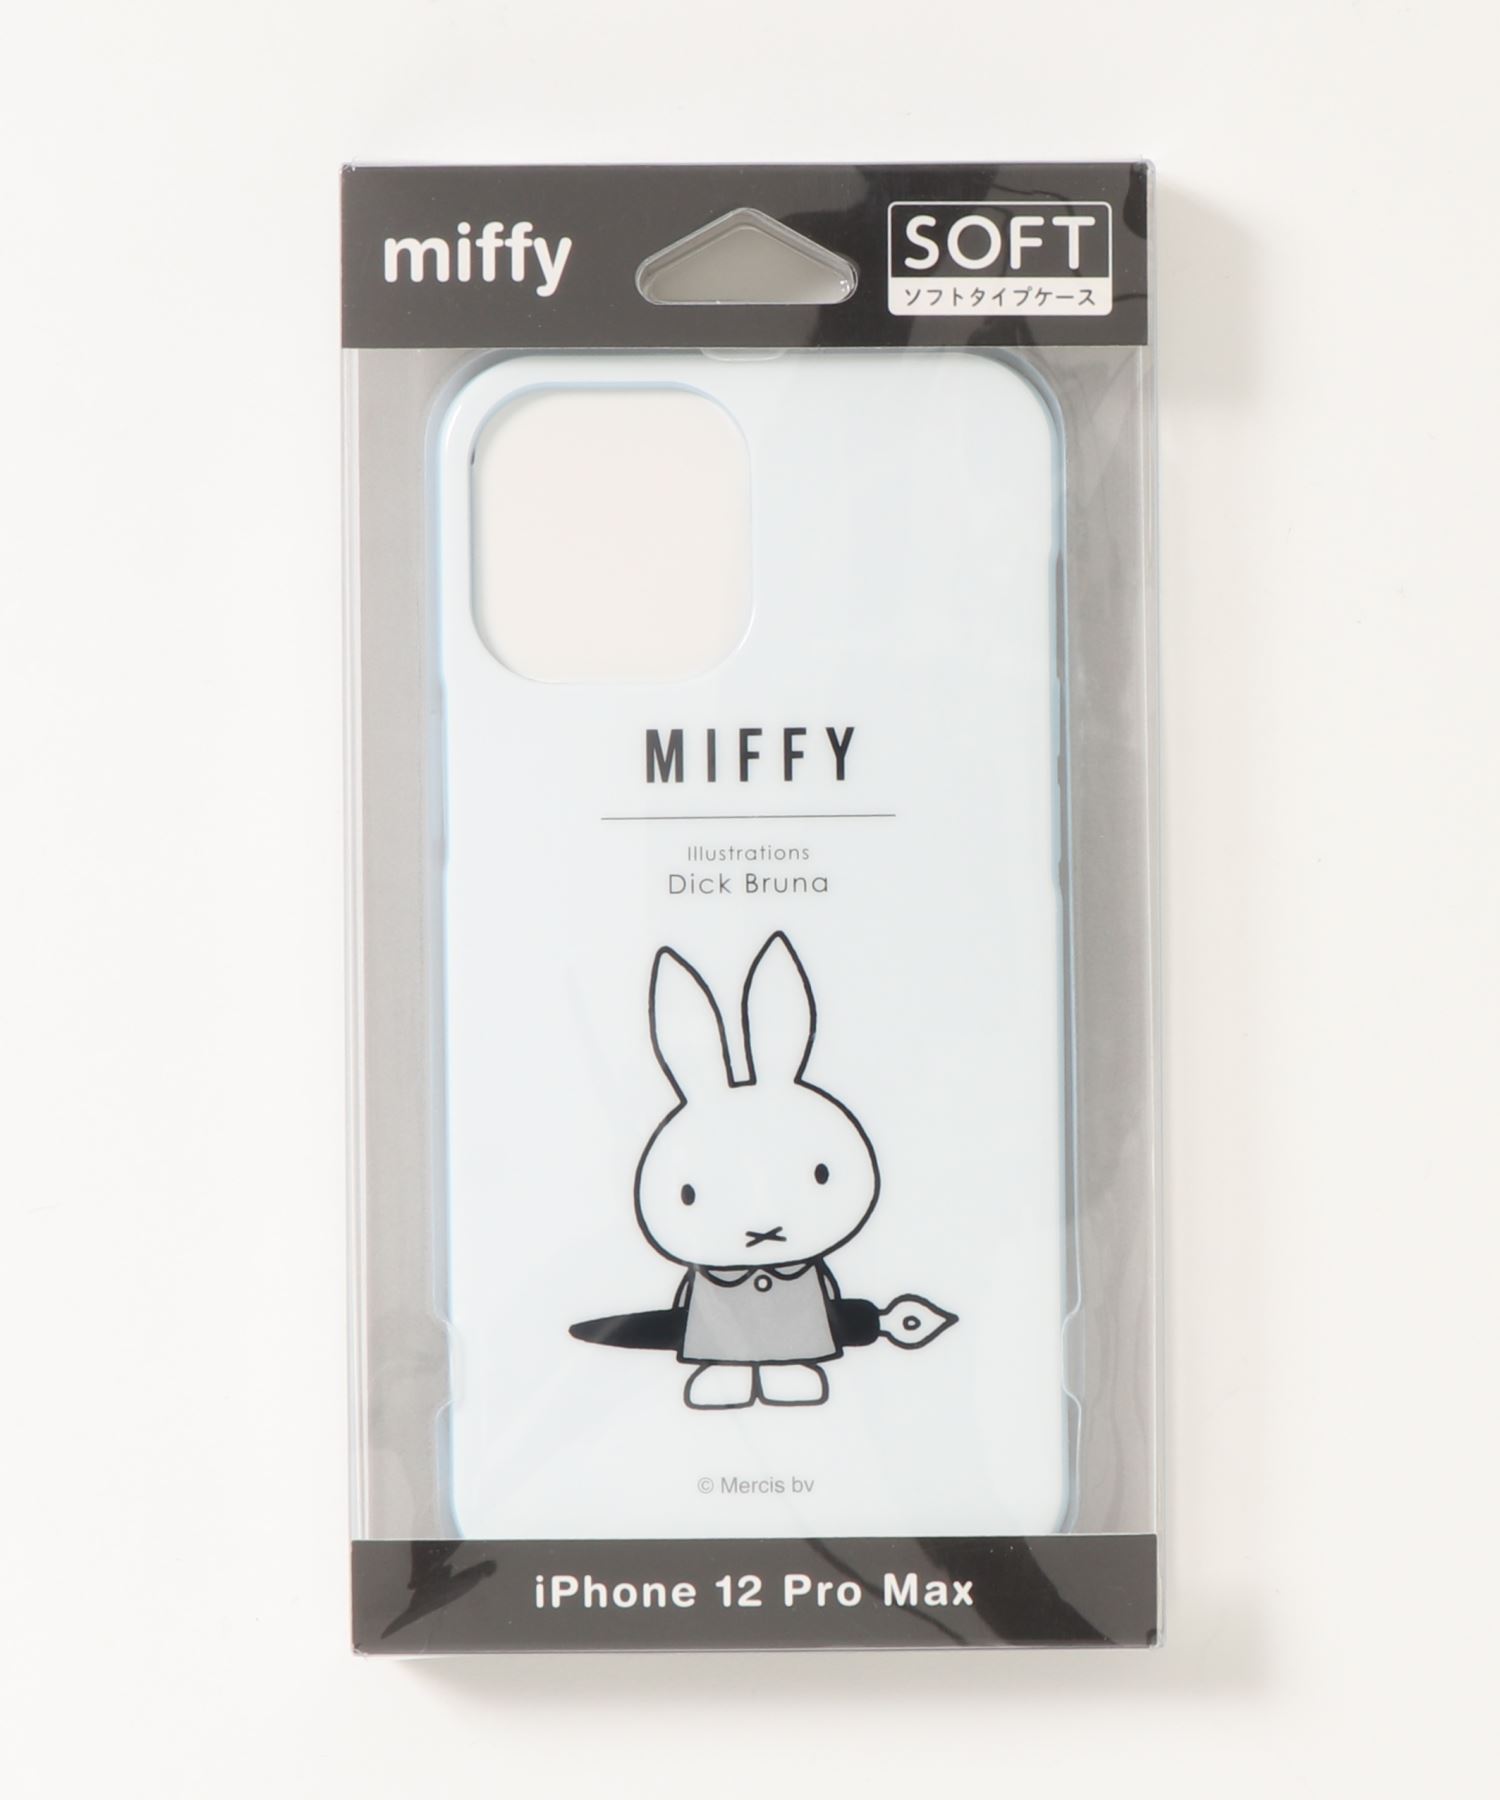 Miffy ミッフィー Iphone12 Pro Max対応ソフトケース Pledge Jaidemo In